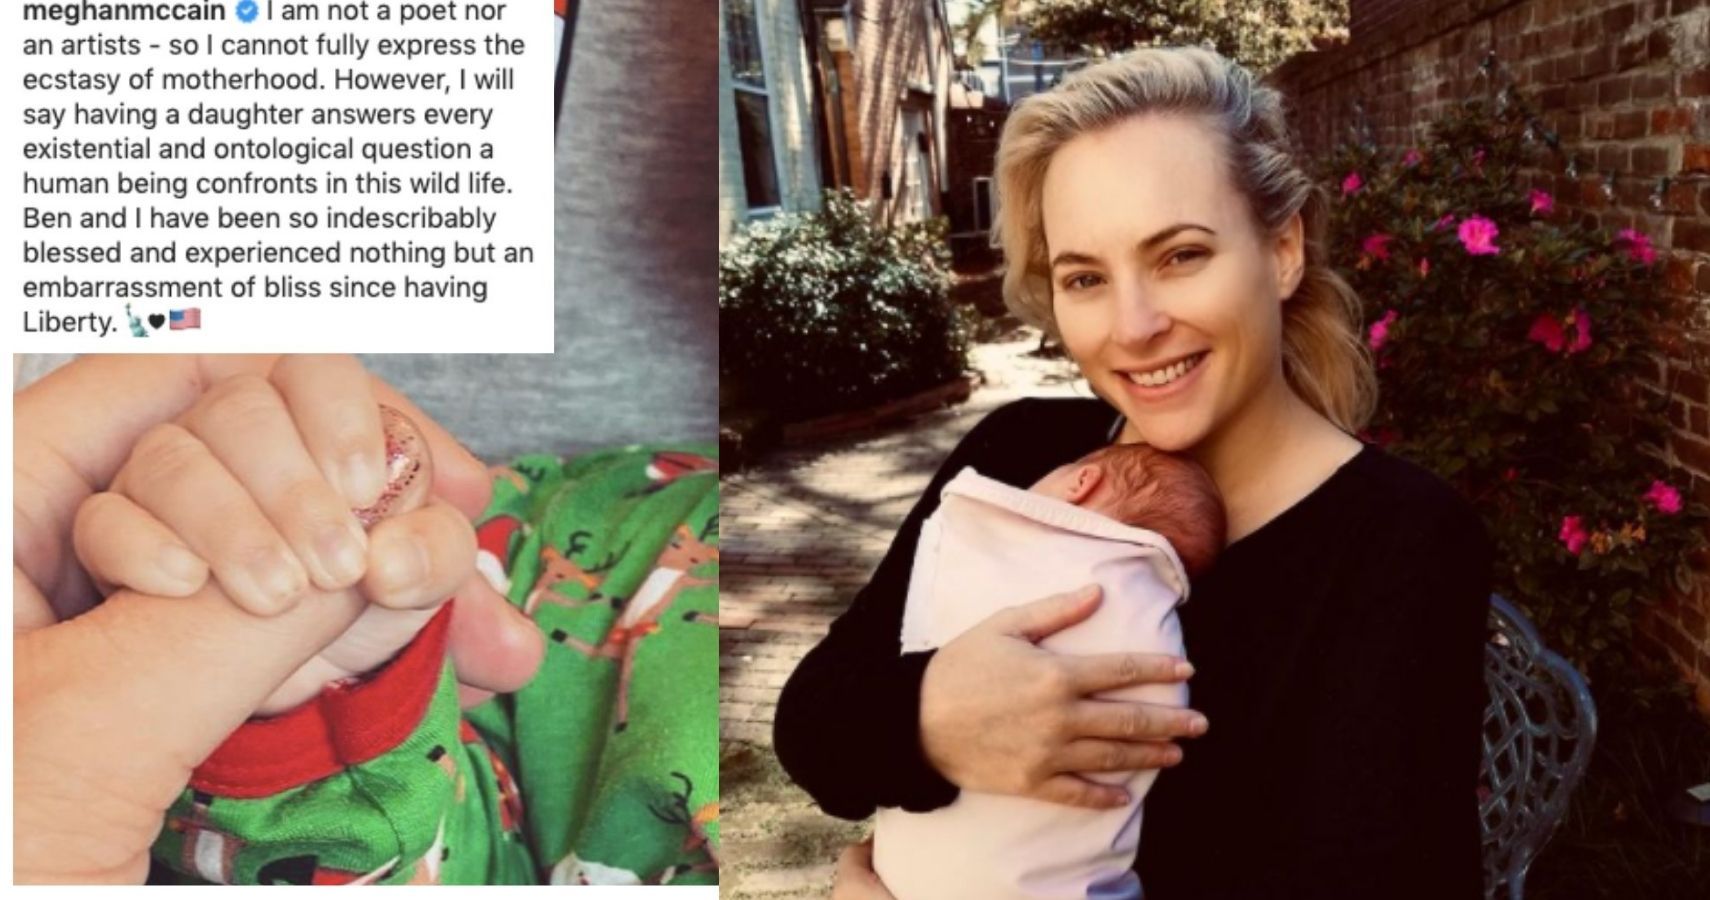 Meghan McCain shares motherhood update and festive photo of baby girl